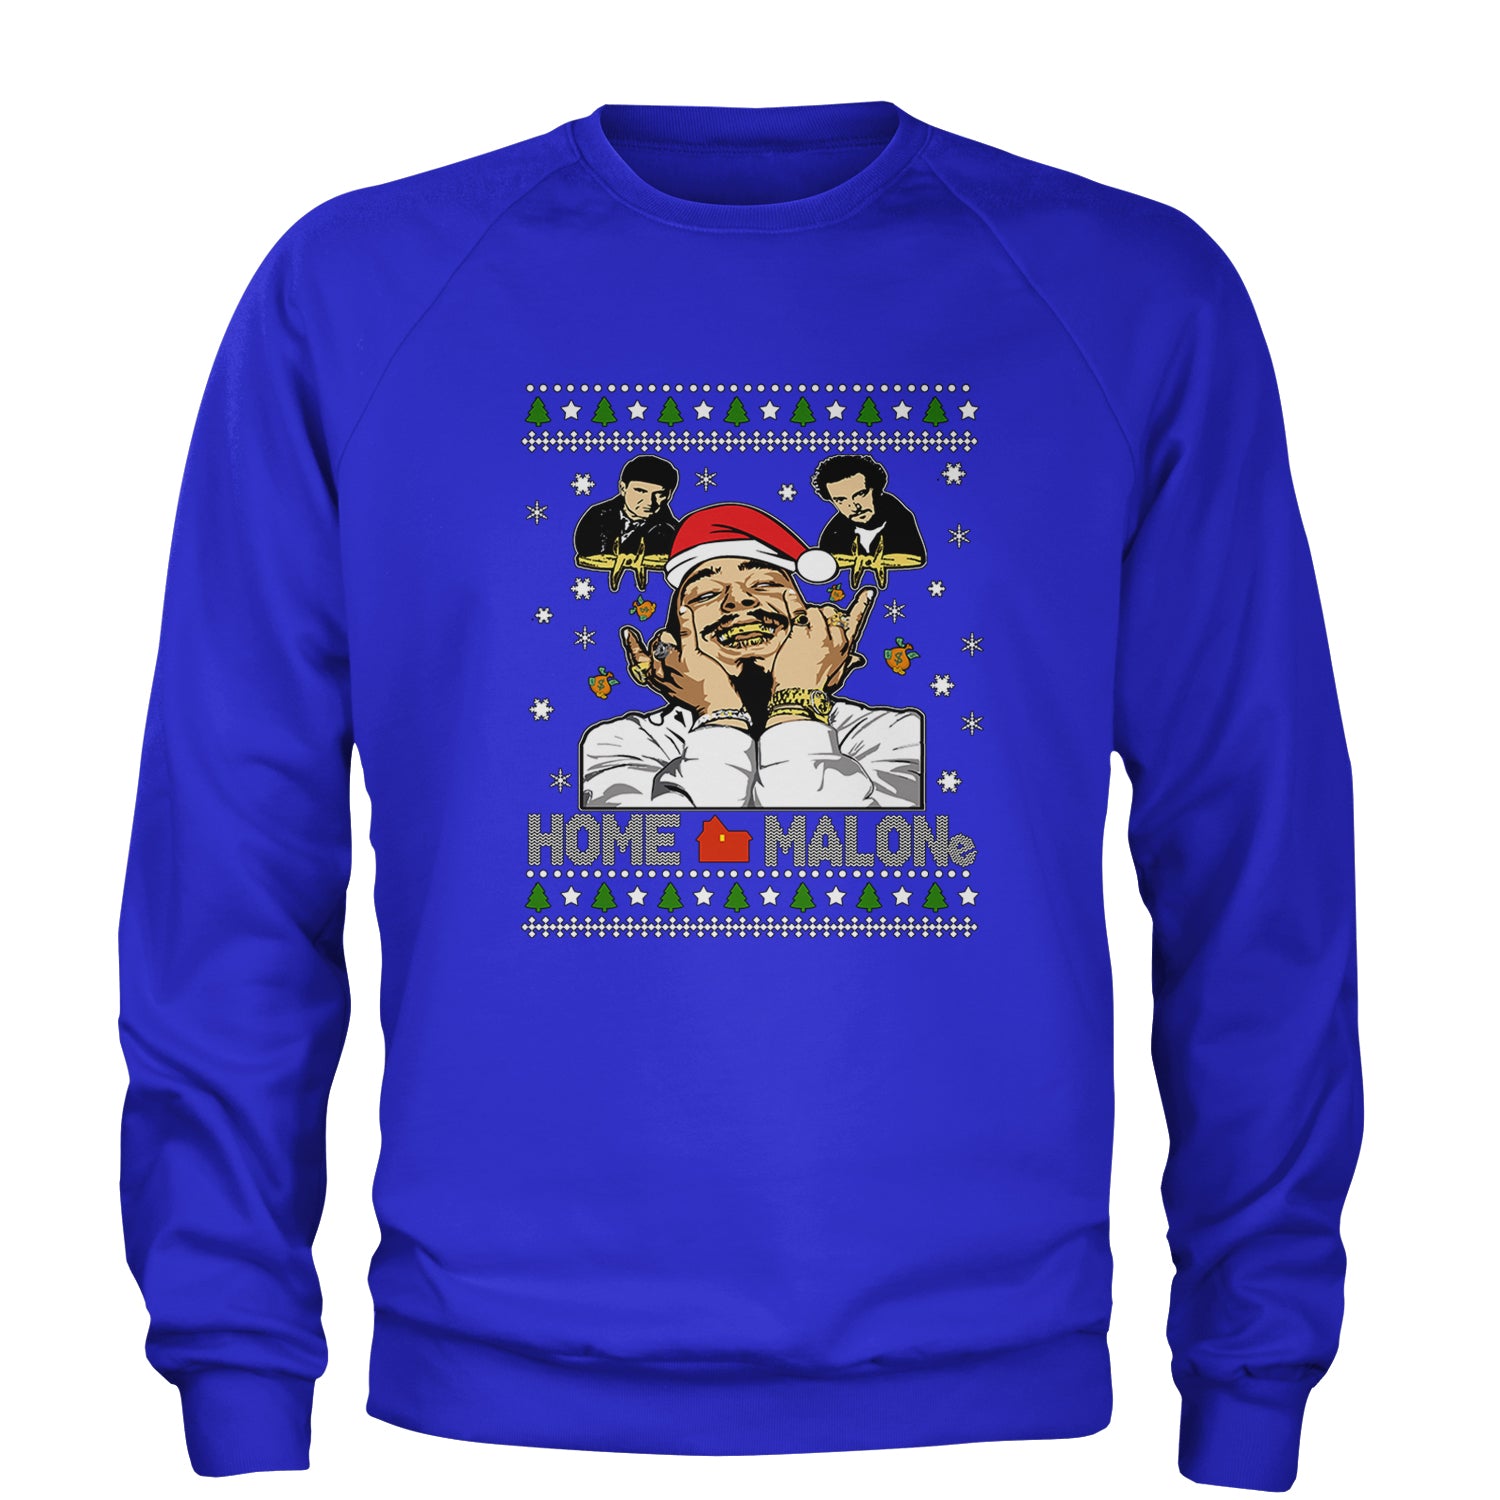 Home Malone Ugly Christmas Adult Crewneck Sweatshirt alone, caulkin, home, malone, mcauley, post by Expression Tees